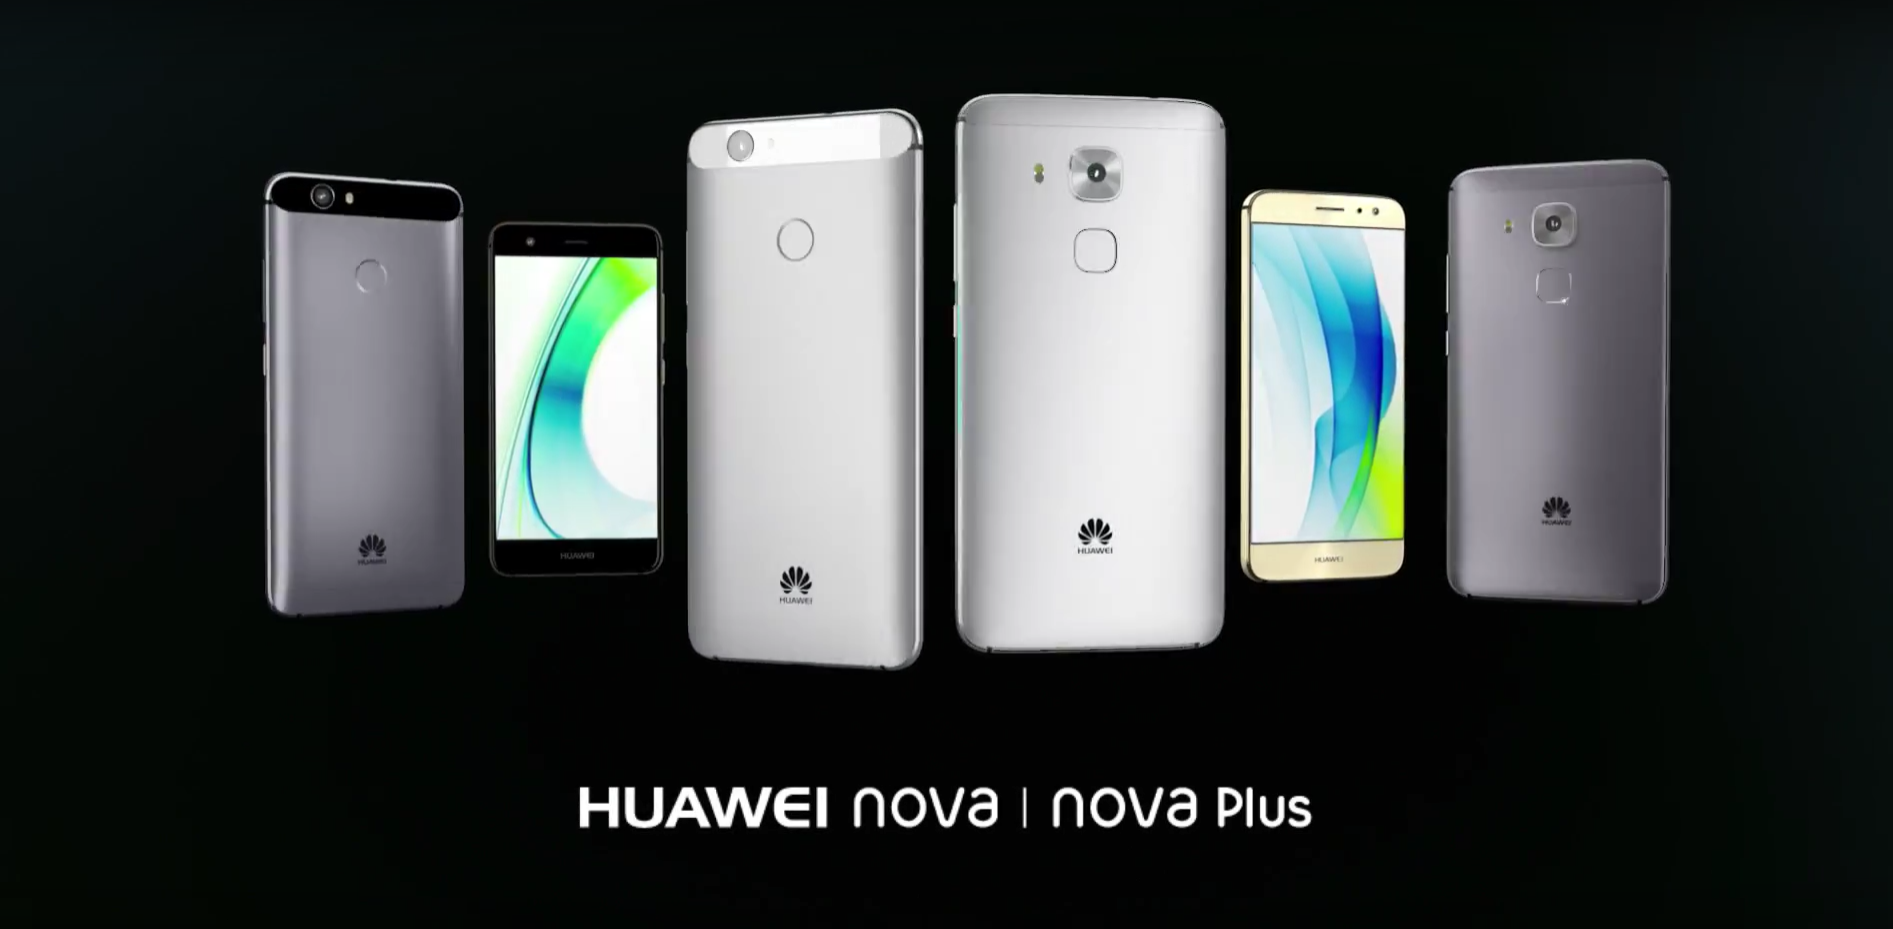 huawei nova plus | Huawei MediaPad M3 | Huawei เปิดตัว Nova, Nova Plus และ MediaPad M3 ในงาน IFA 2016 ที่ผ่านมา